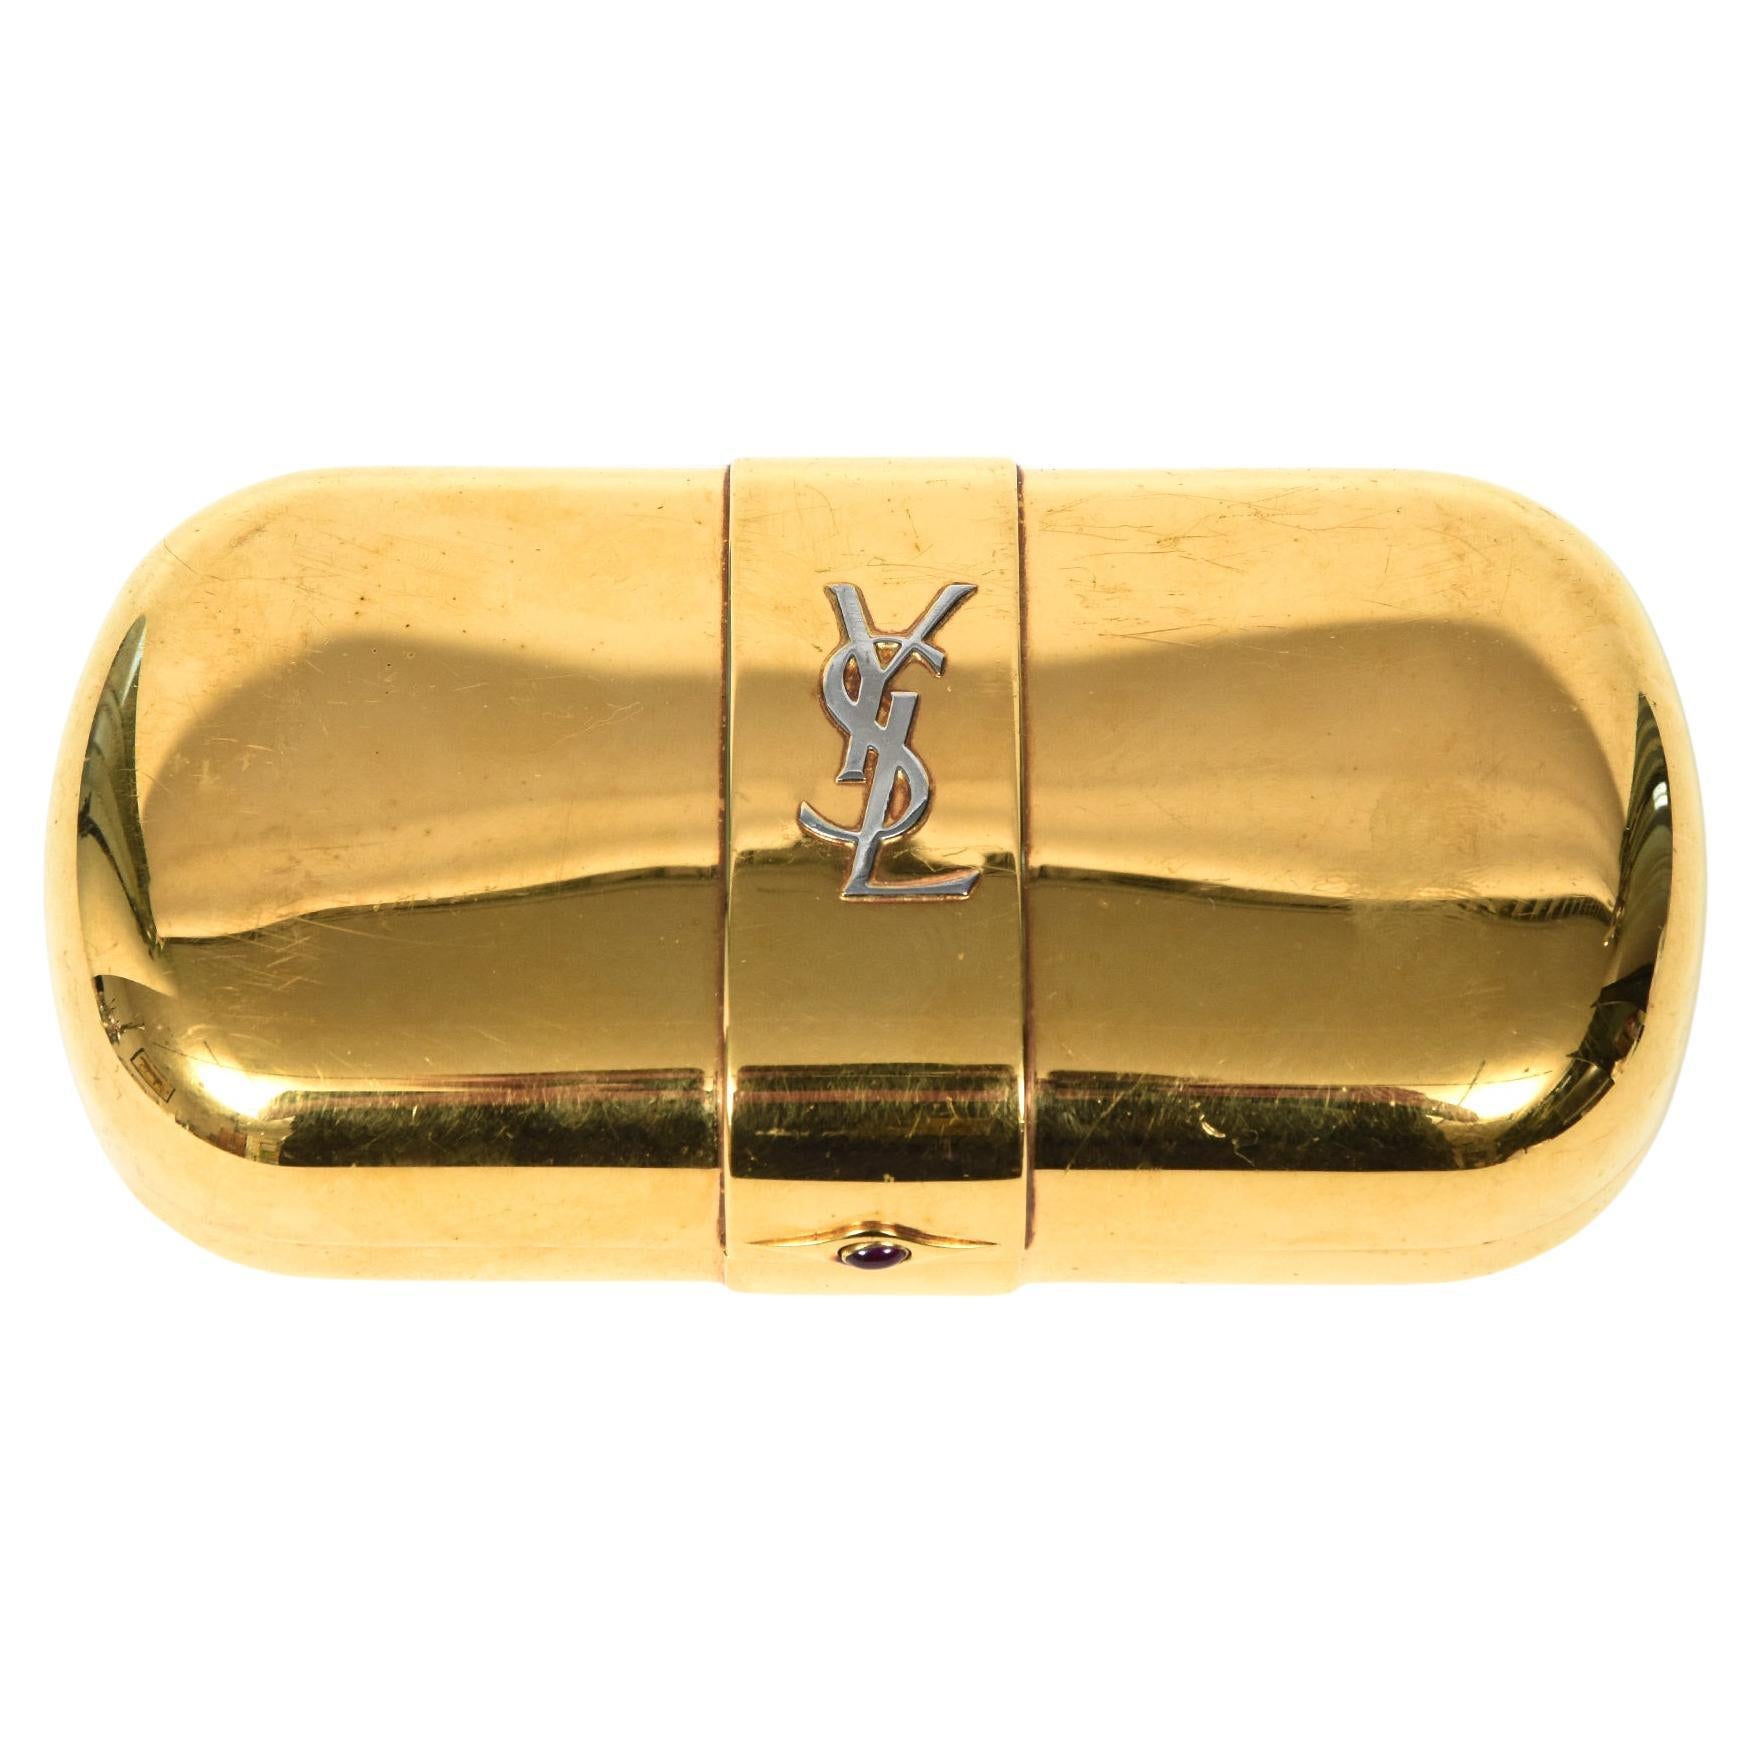 YSL Yves Saint Laurent Minaudière Gold Clutch Evening Bag Circa 1980s